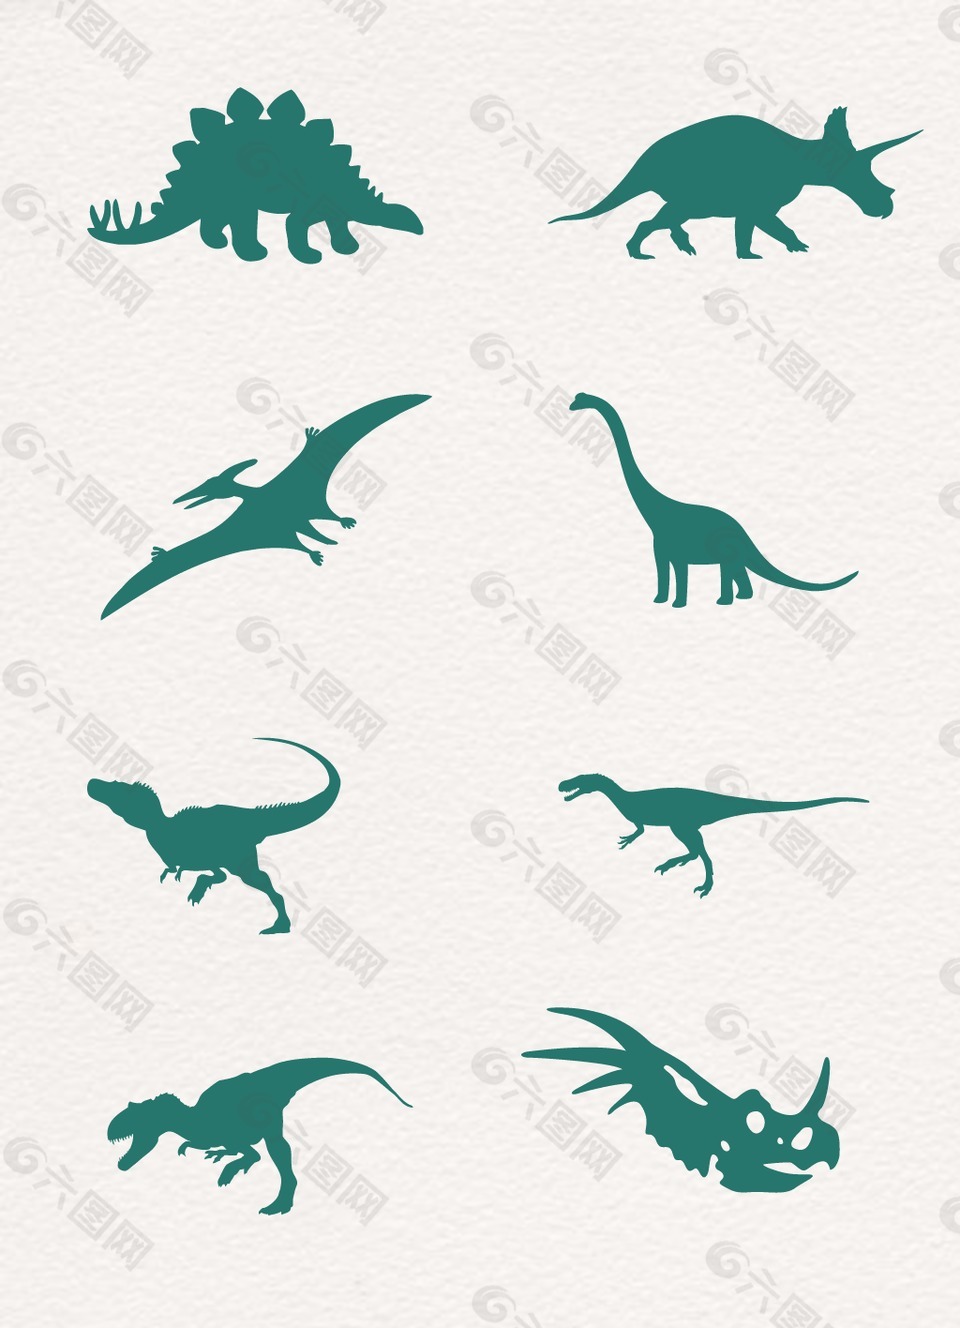 绿色剪影恐龙图案